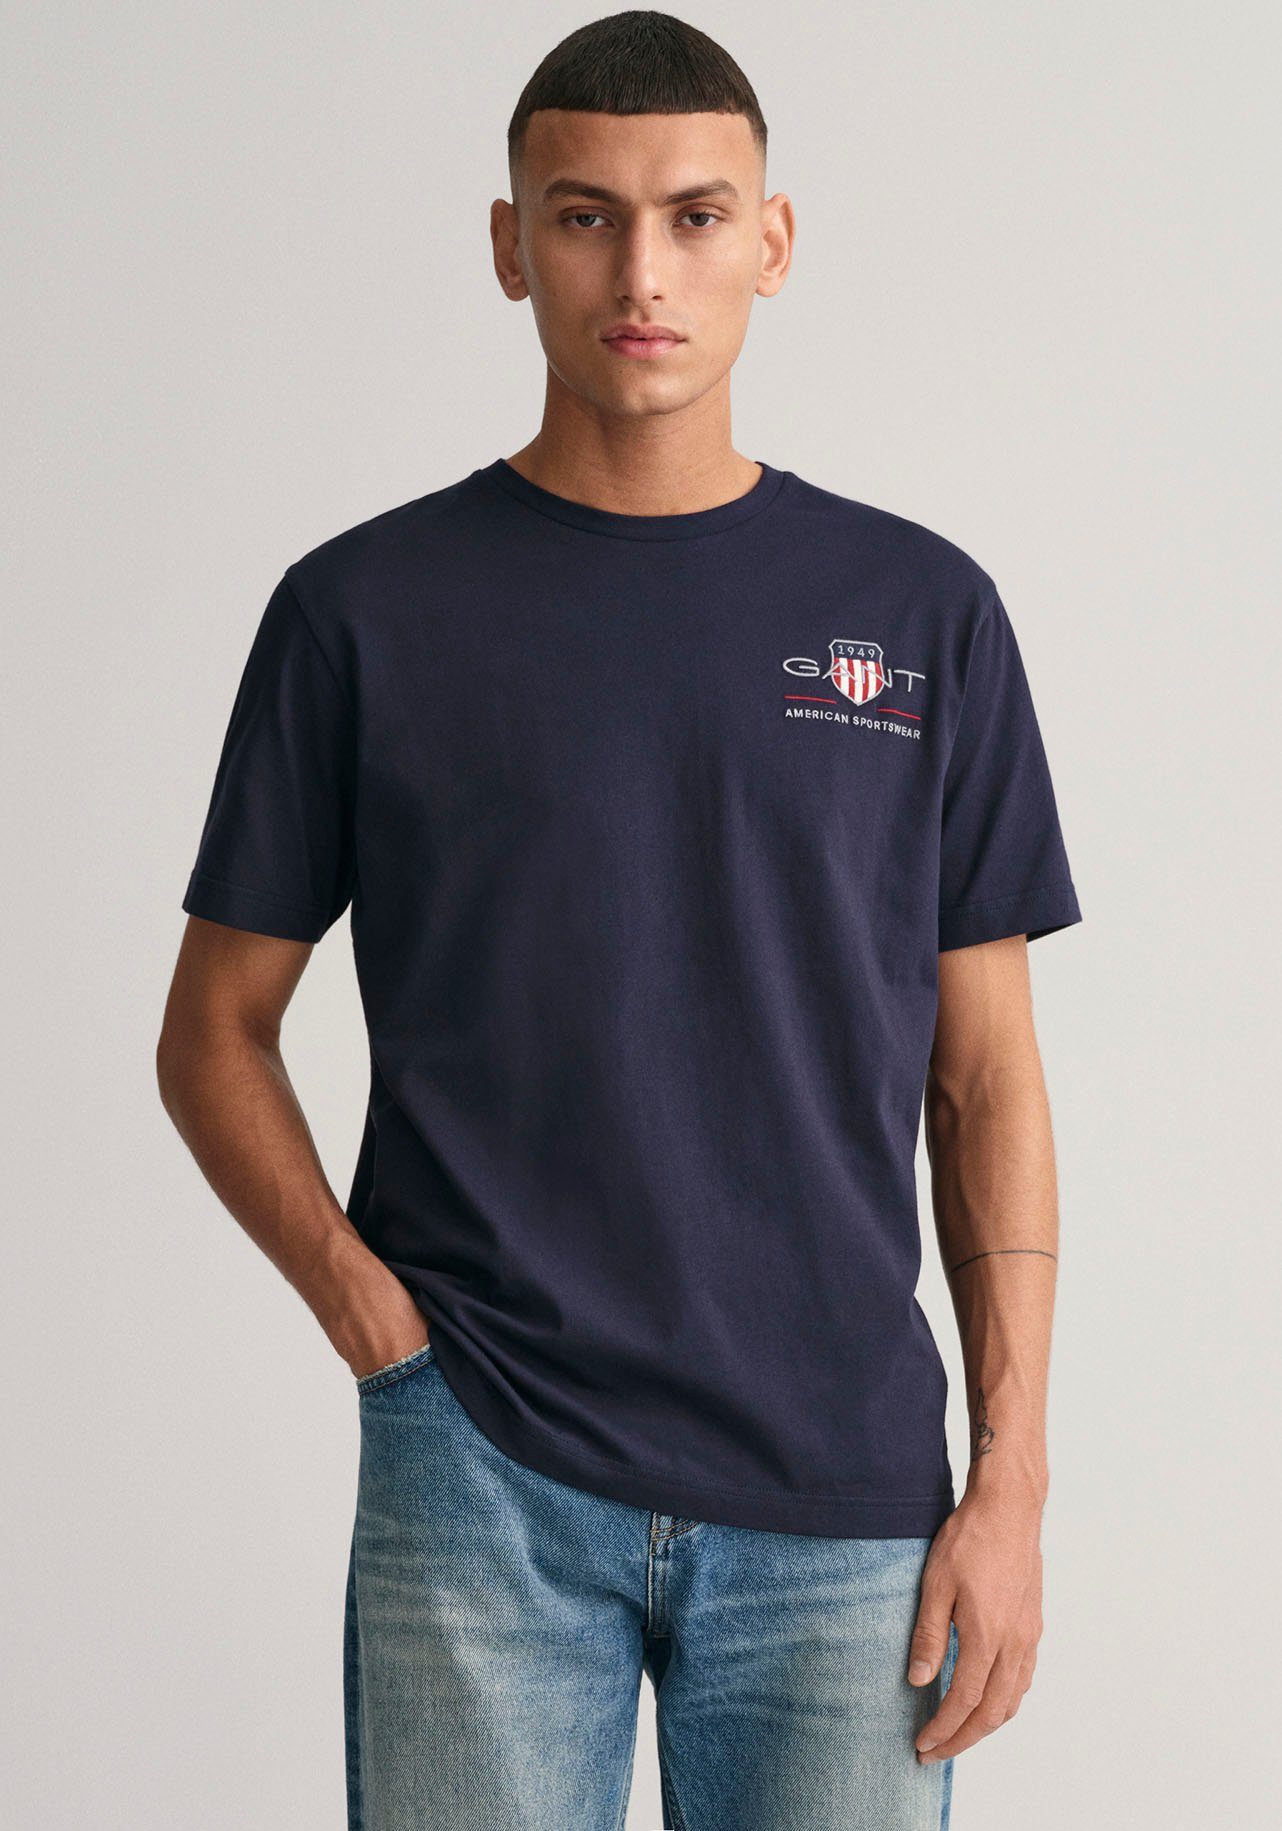 Gant T-Shirt REG ARCHIVE den SS dem EMB von SHIELD aus inspiriert evening 1980er-Jahren Archiv blue T-SHIRT